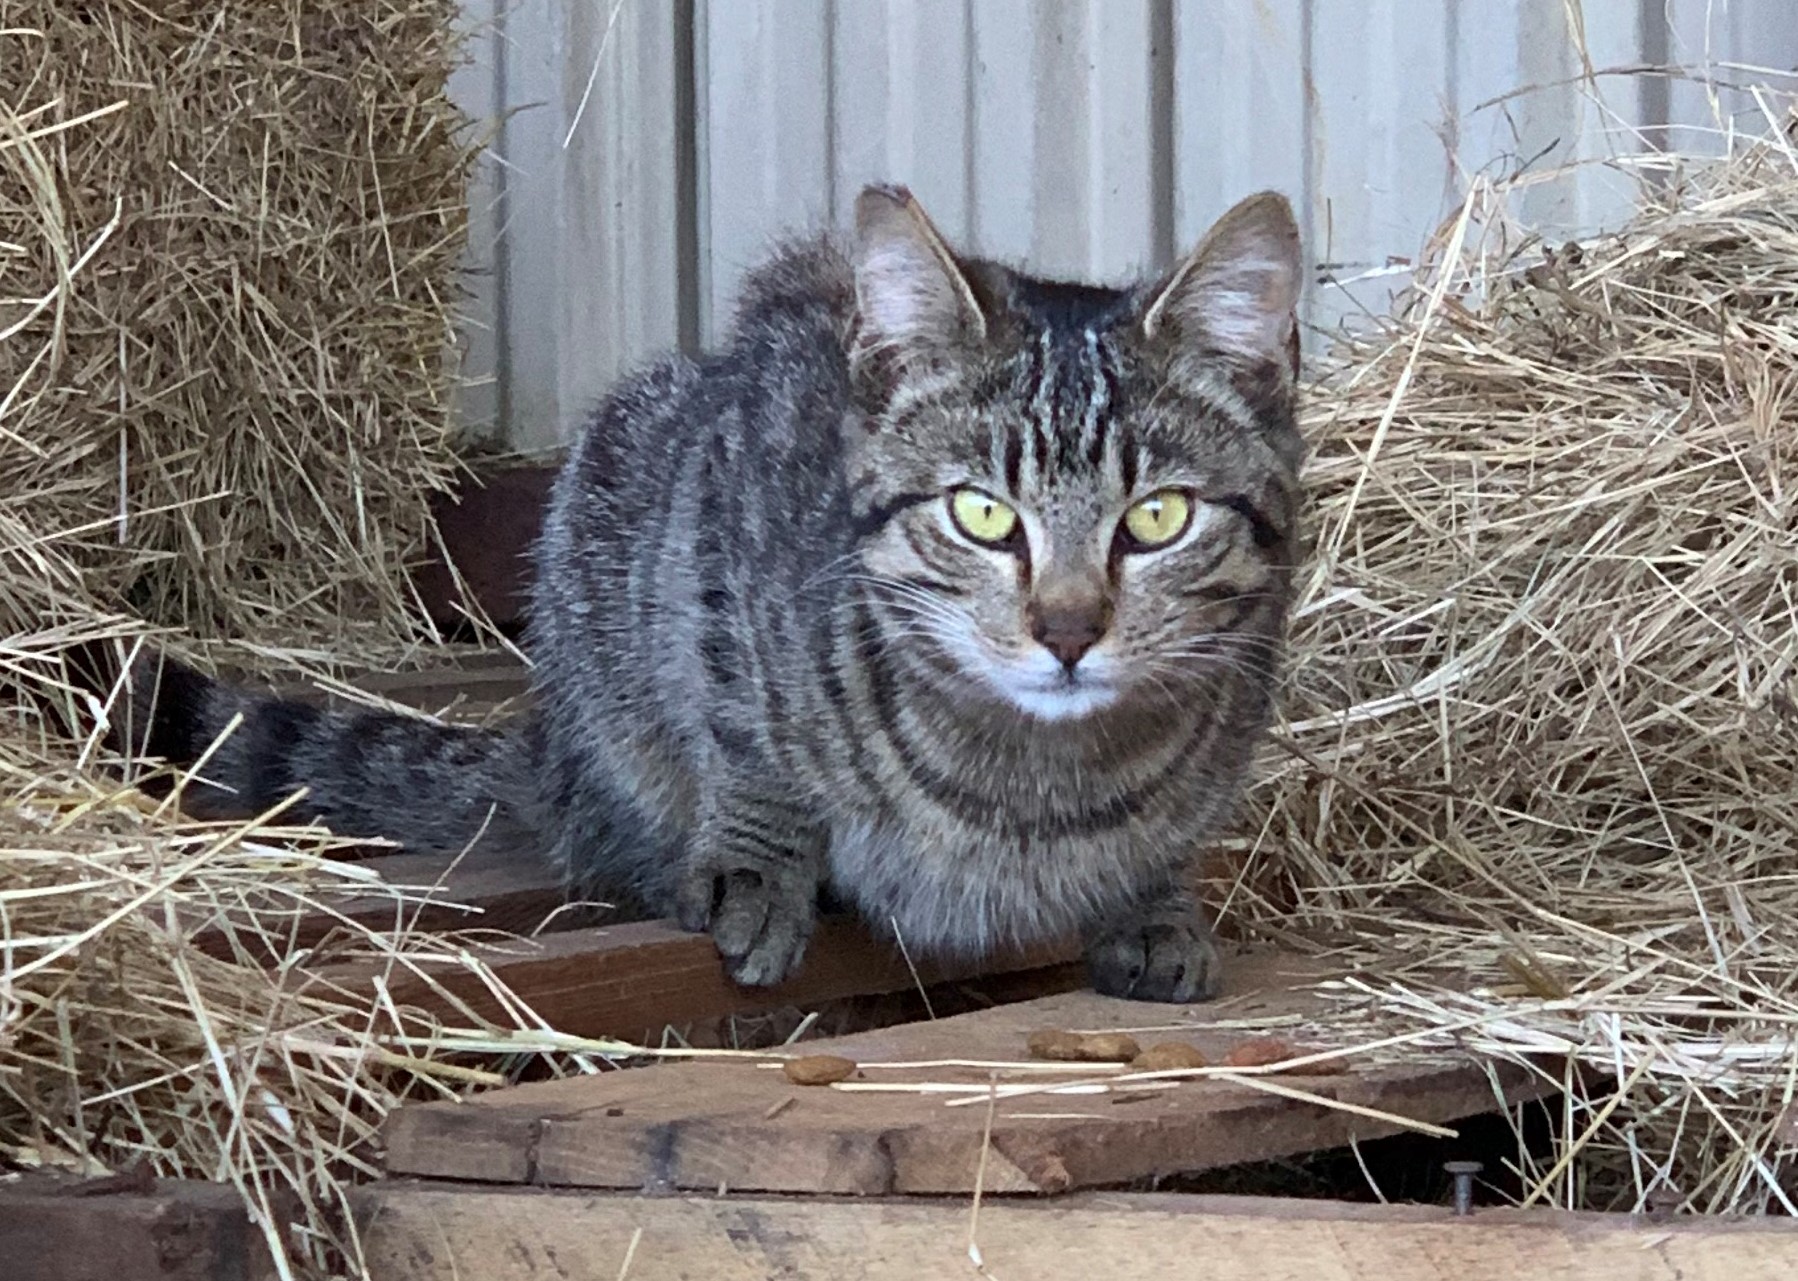 Barn Cat/Mouser, an adoptable Domestic Short Hair in Watkinsville, GA, 30677 | Photo Image 1